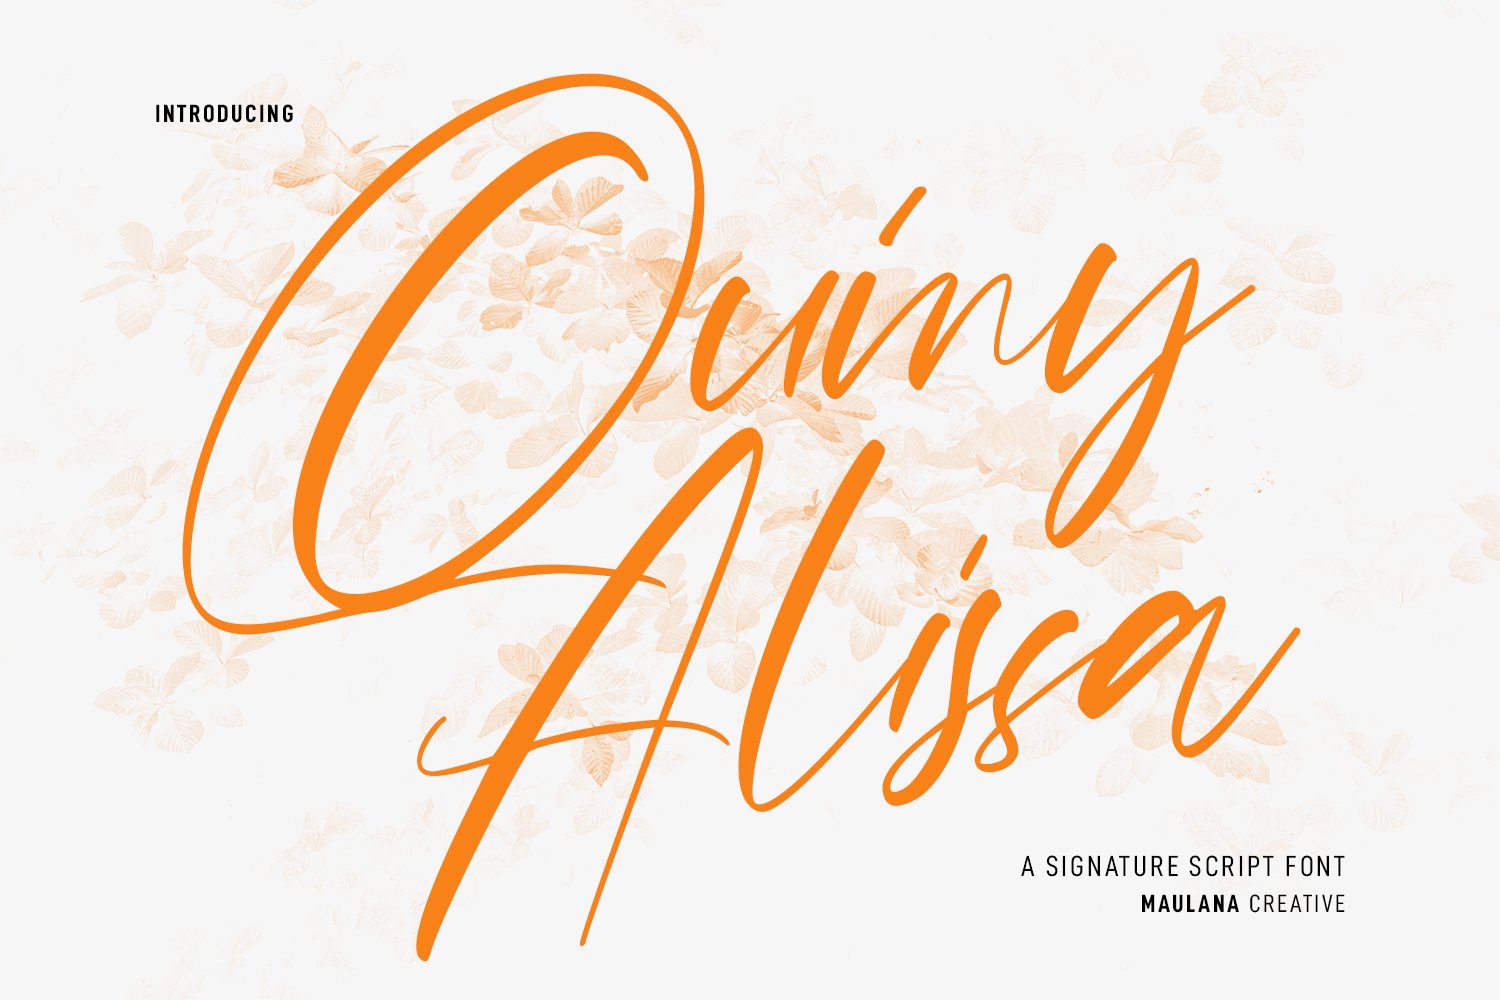 Quiny Alissa Signature Script Font cover image.